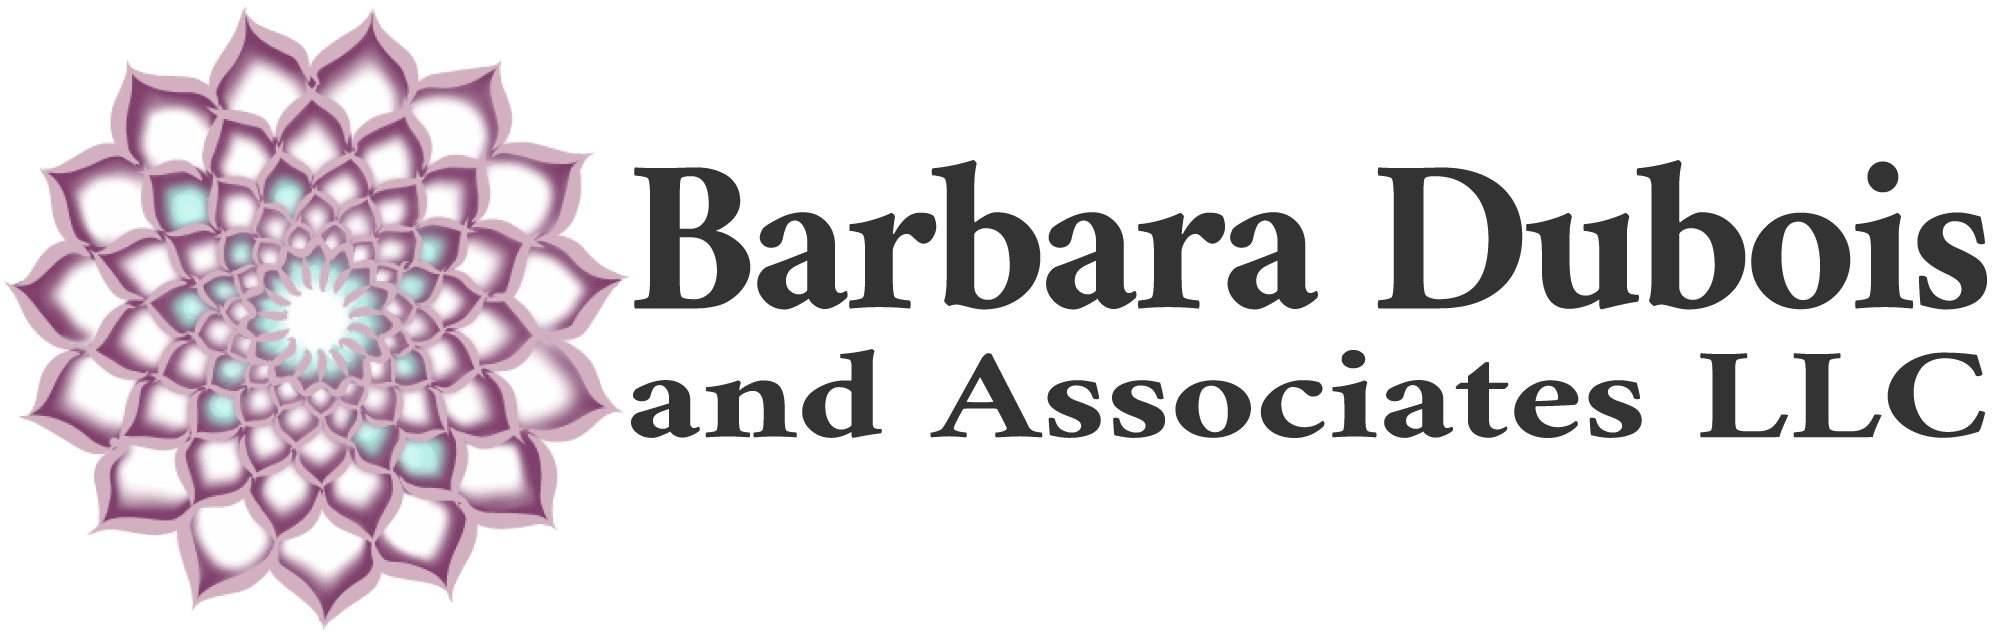 Barbara Dubois and Associates LLC